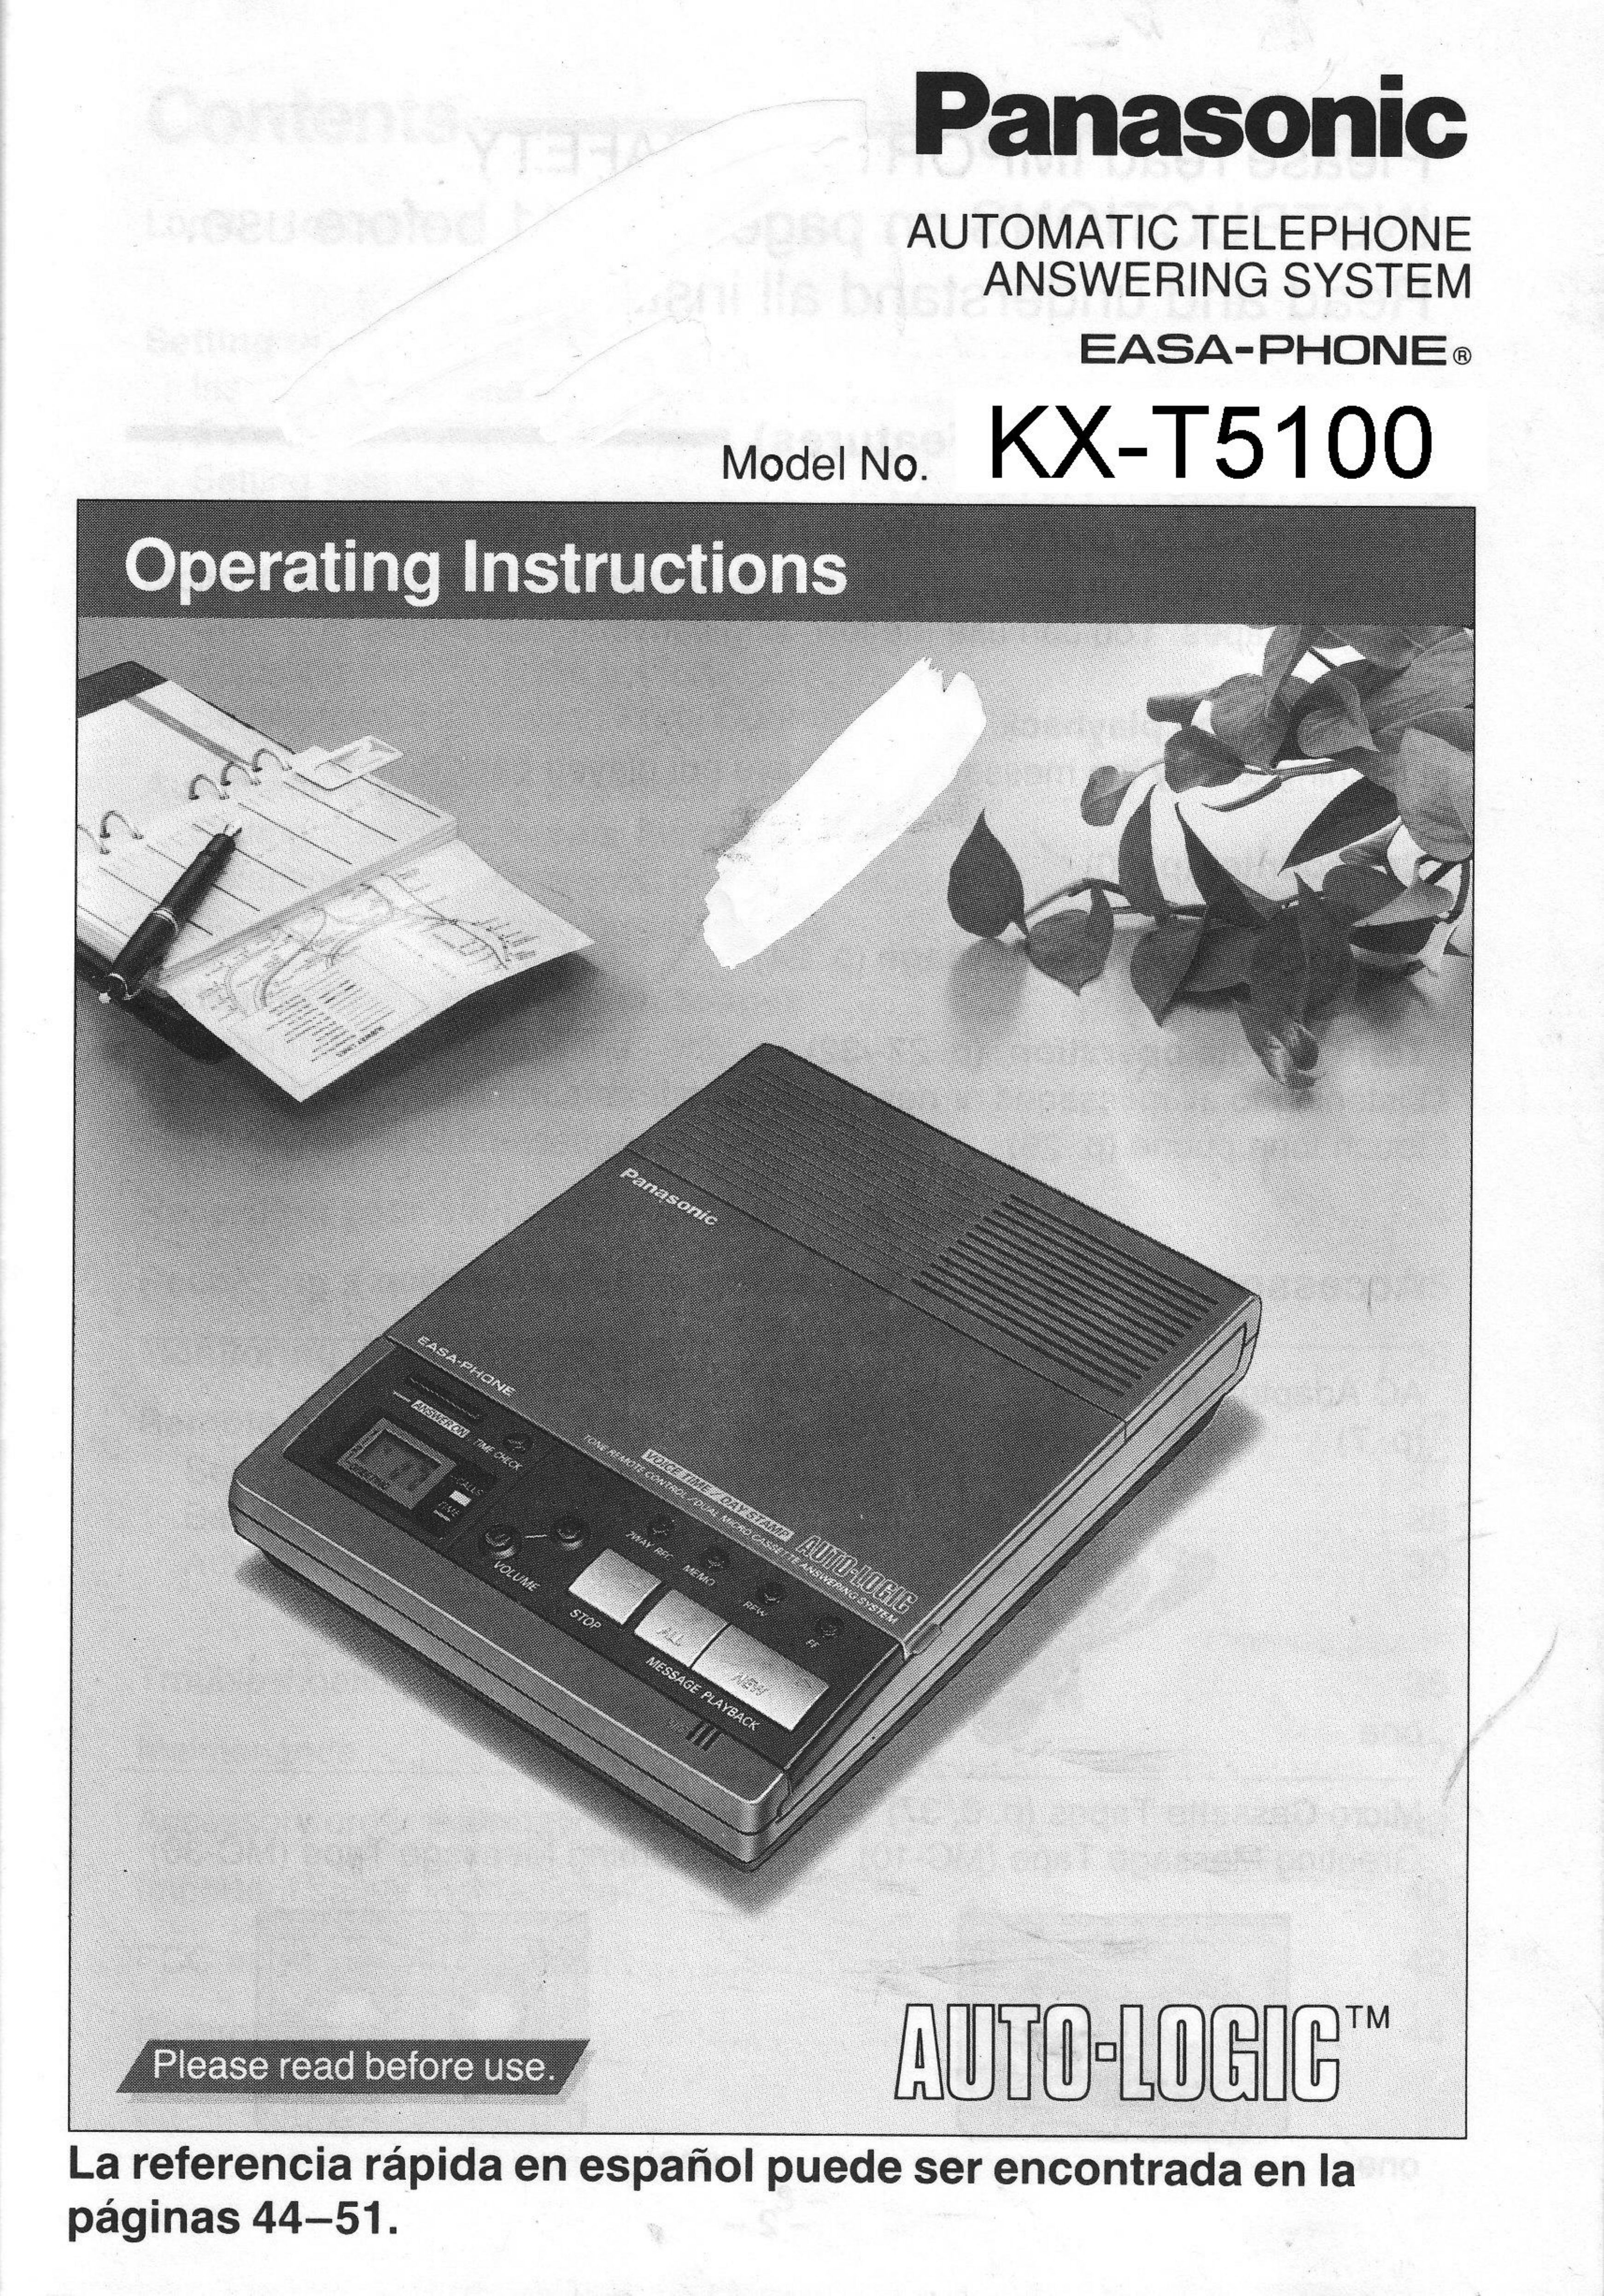 Panasonic KX-T5100 Answering Machine User Manual